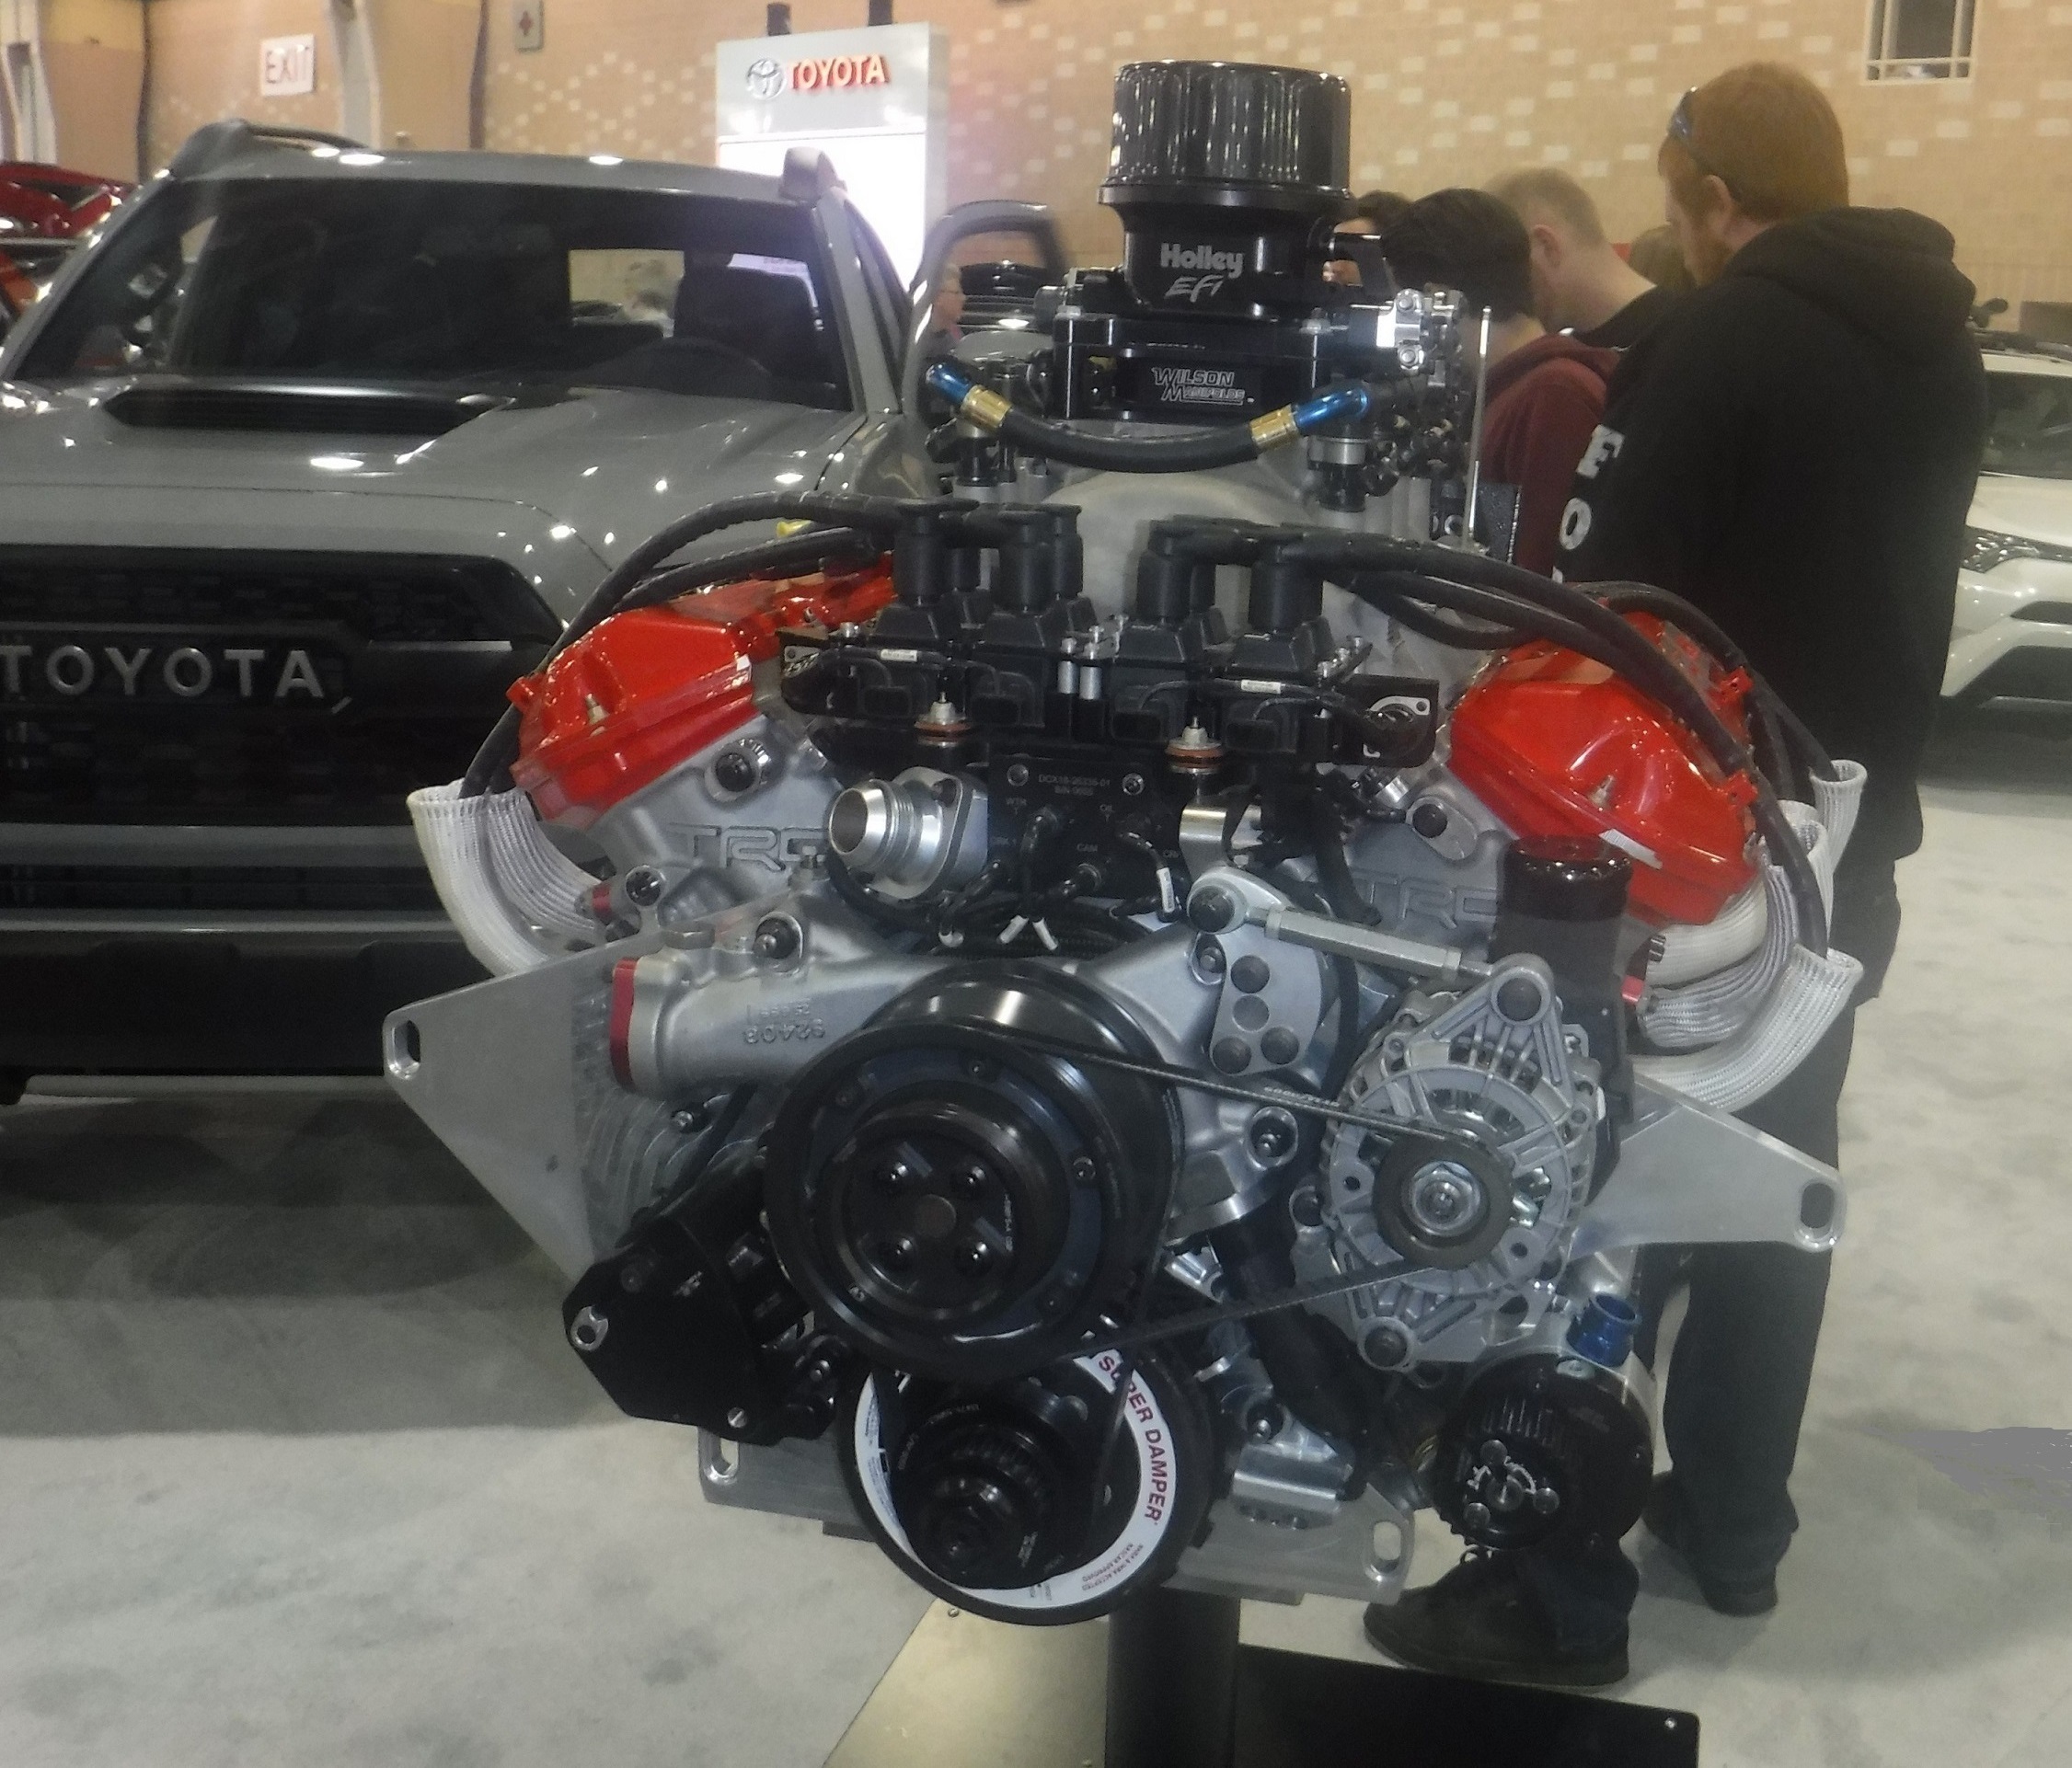 Nascar - Toyota Engine